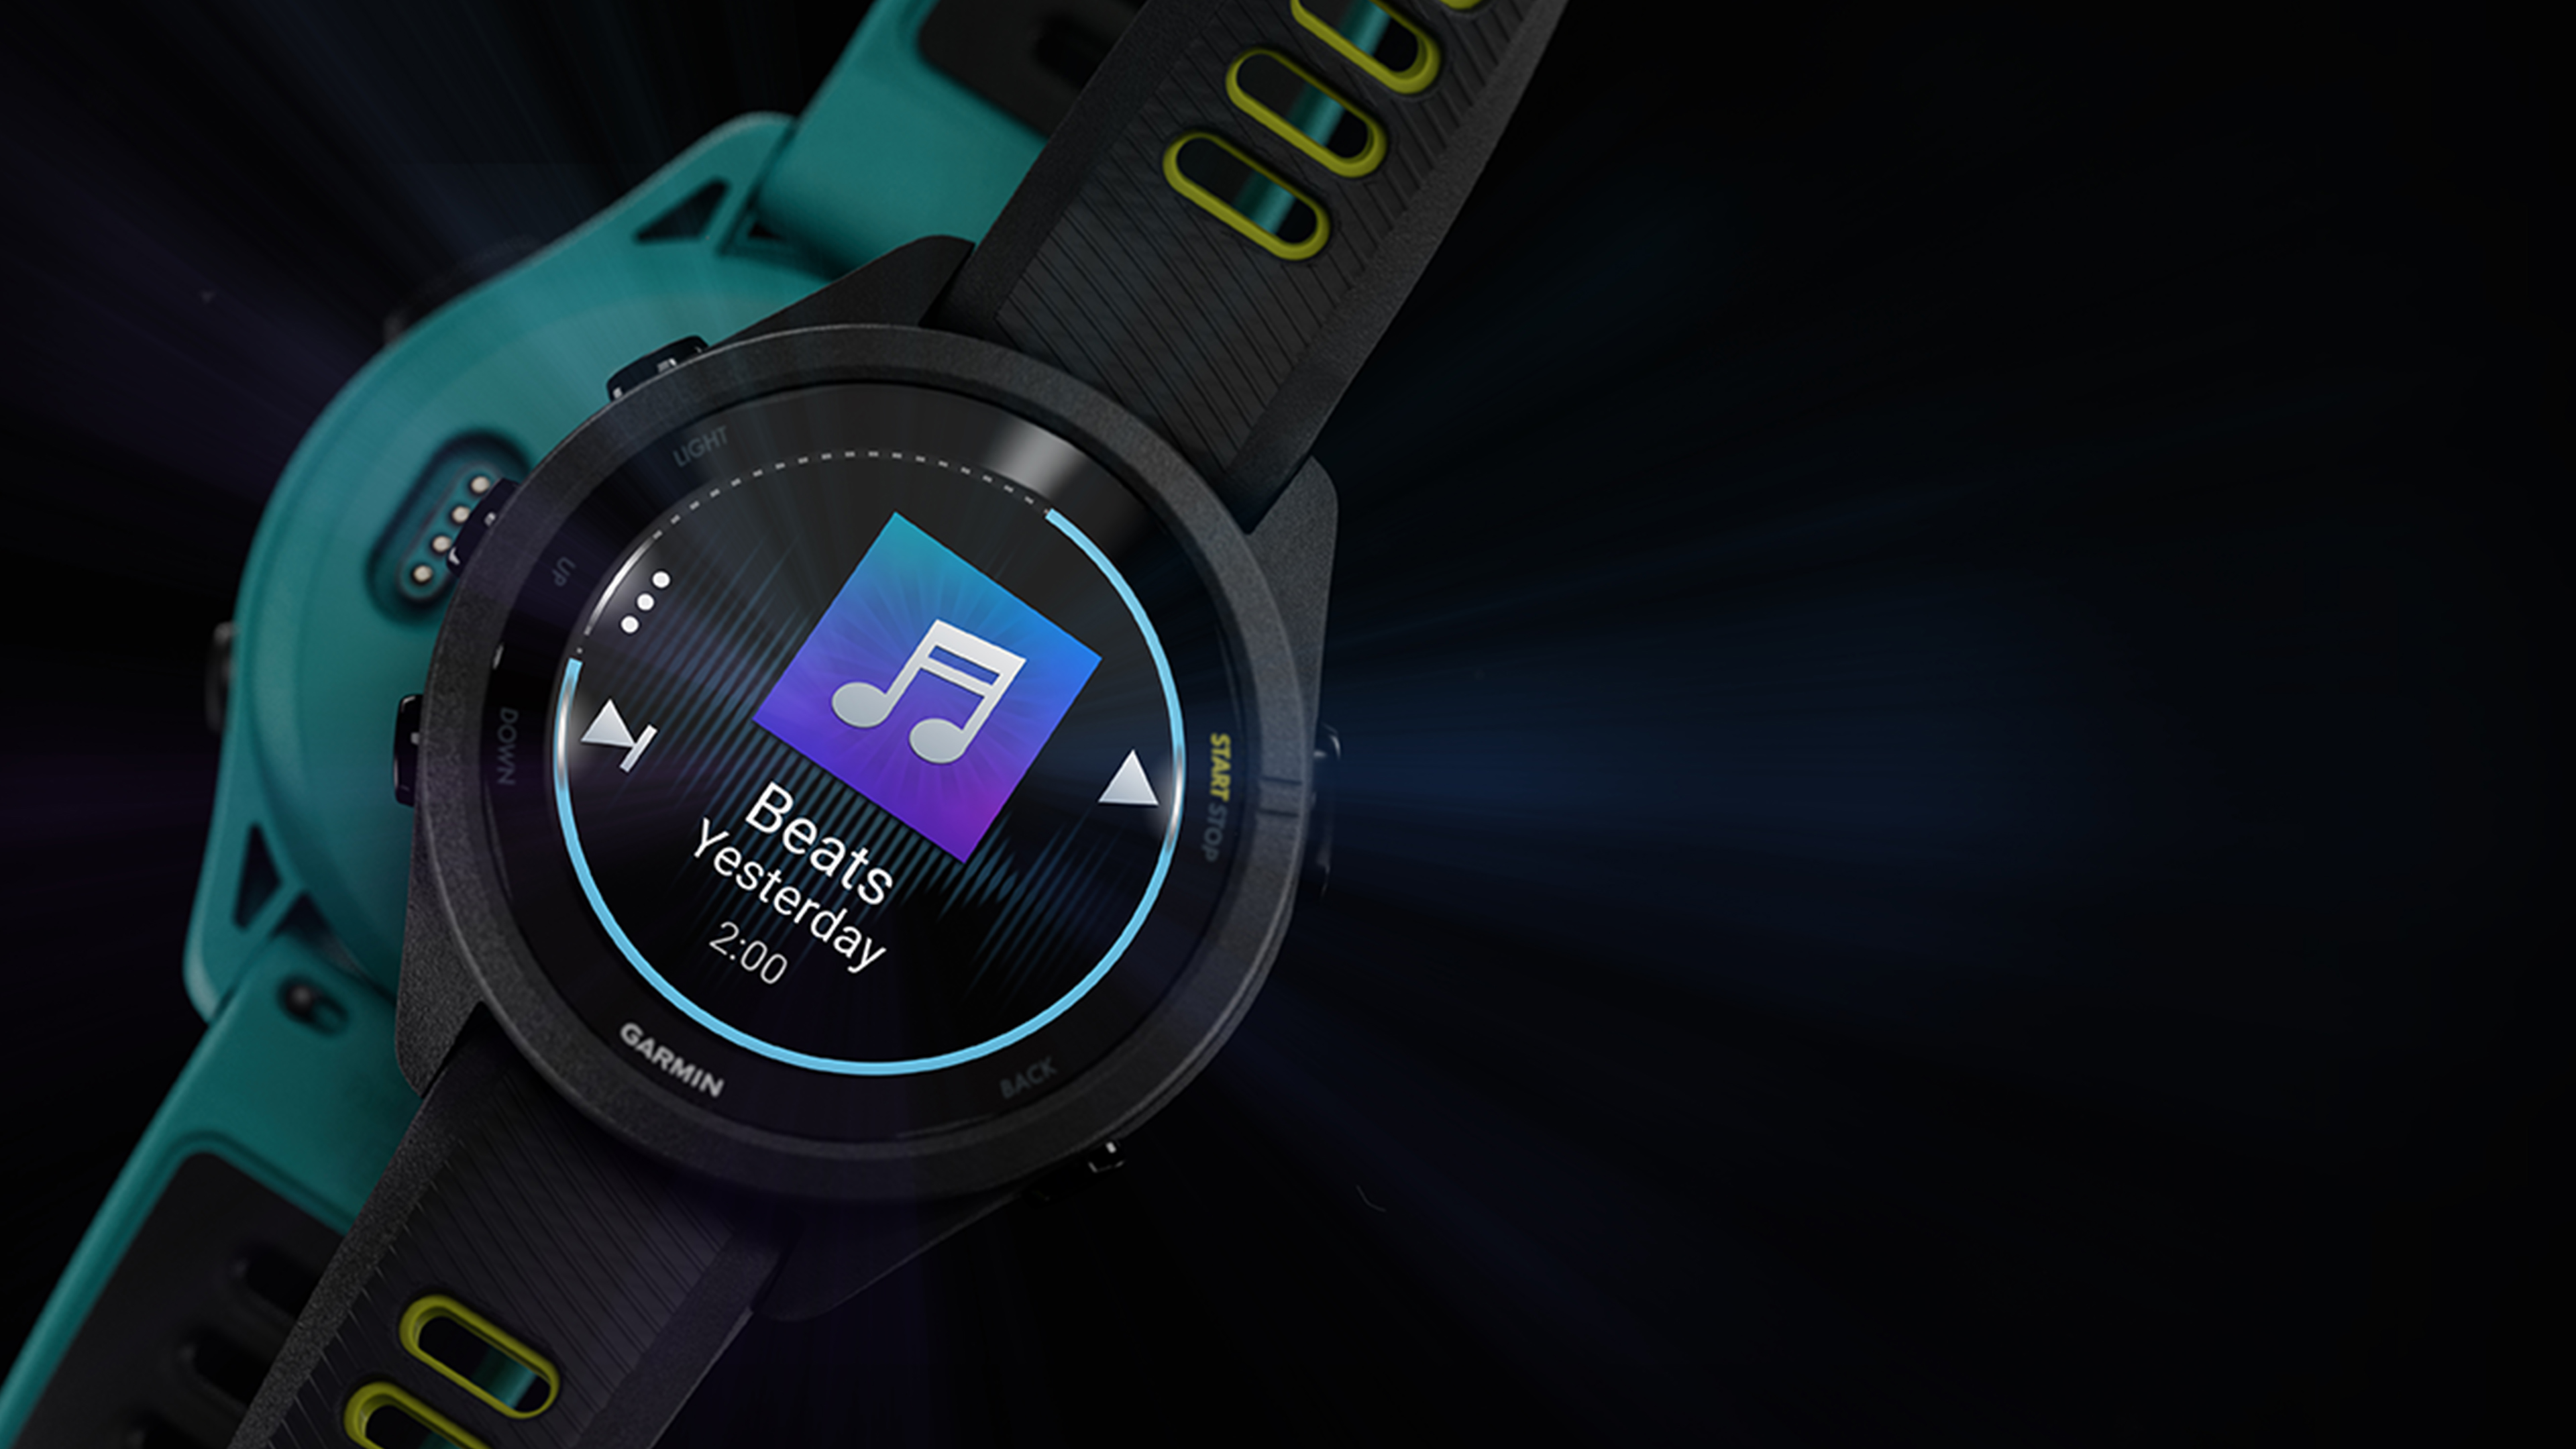  Garmin Forerunner 265 (Aqua/Black) Running GPS Smartwatch, Colorful AMOLED Display, Training Metric, & Recovery Insights